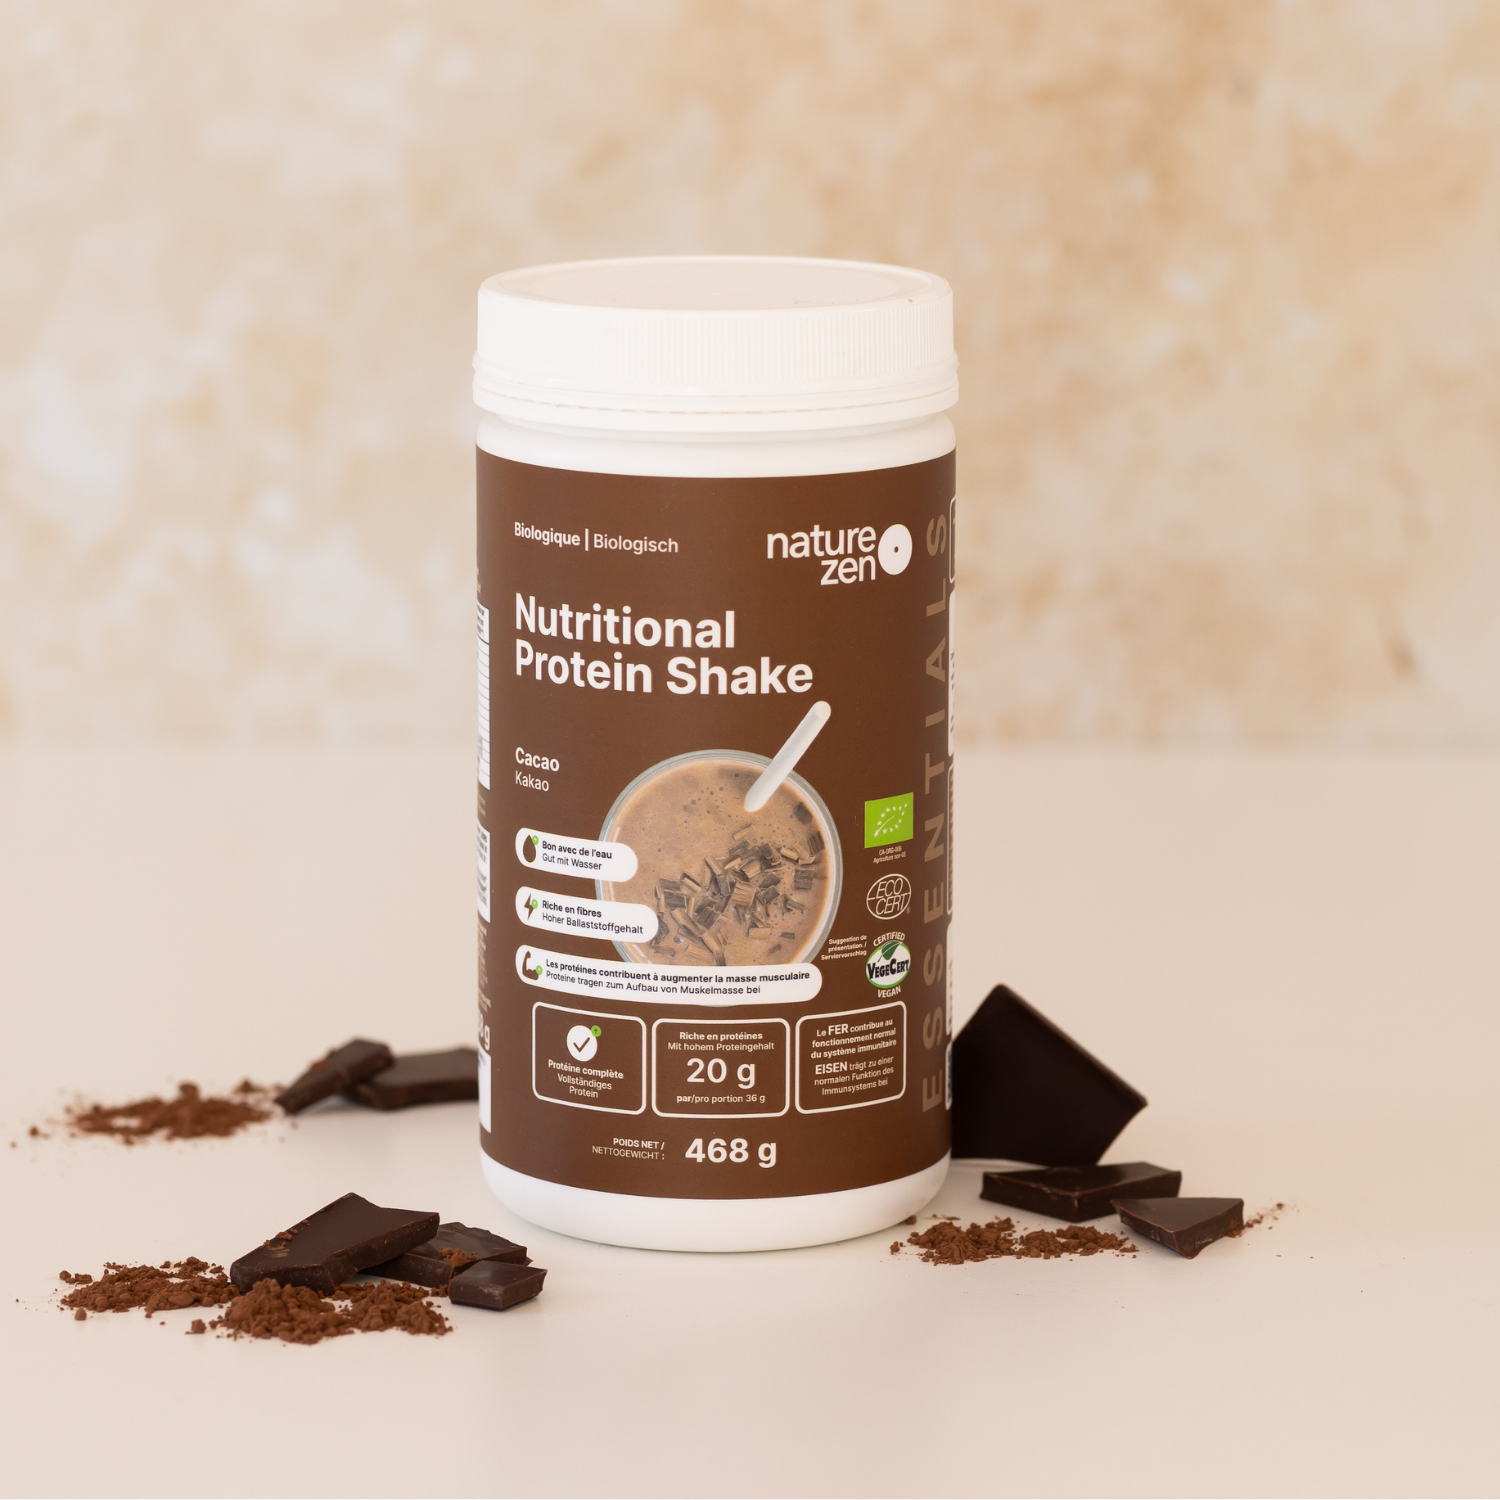 Organic Vegan Nutritional Protein Shake Powder | Nature Zen Essentials - Chocolate